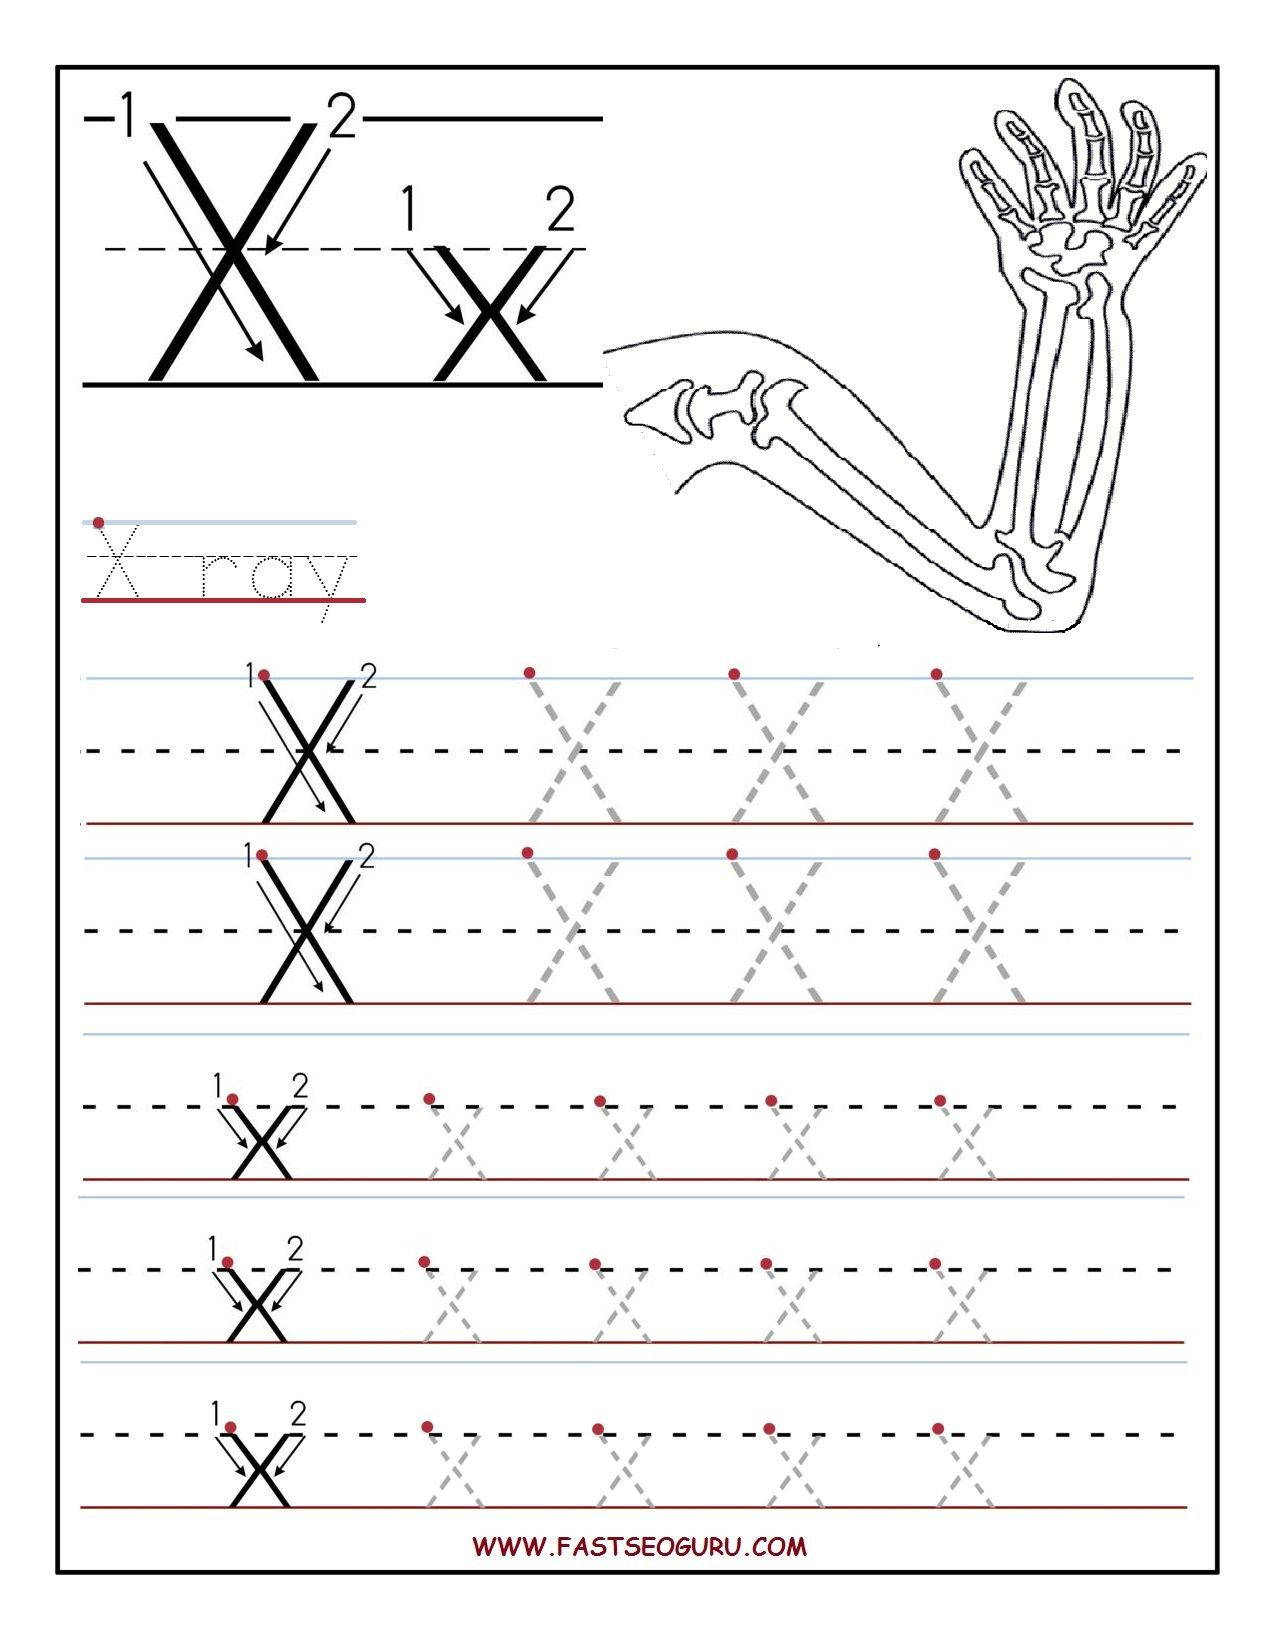 Pinvilfran Gason On Decor | Preschool Worksheets inside Tracing Letter X Worksheets